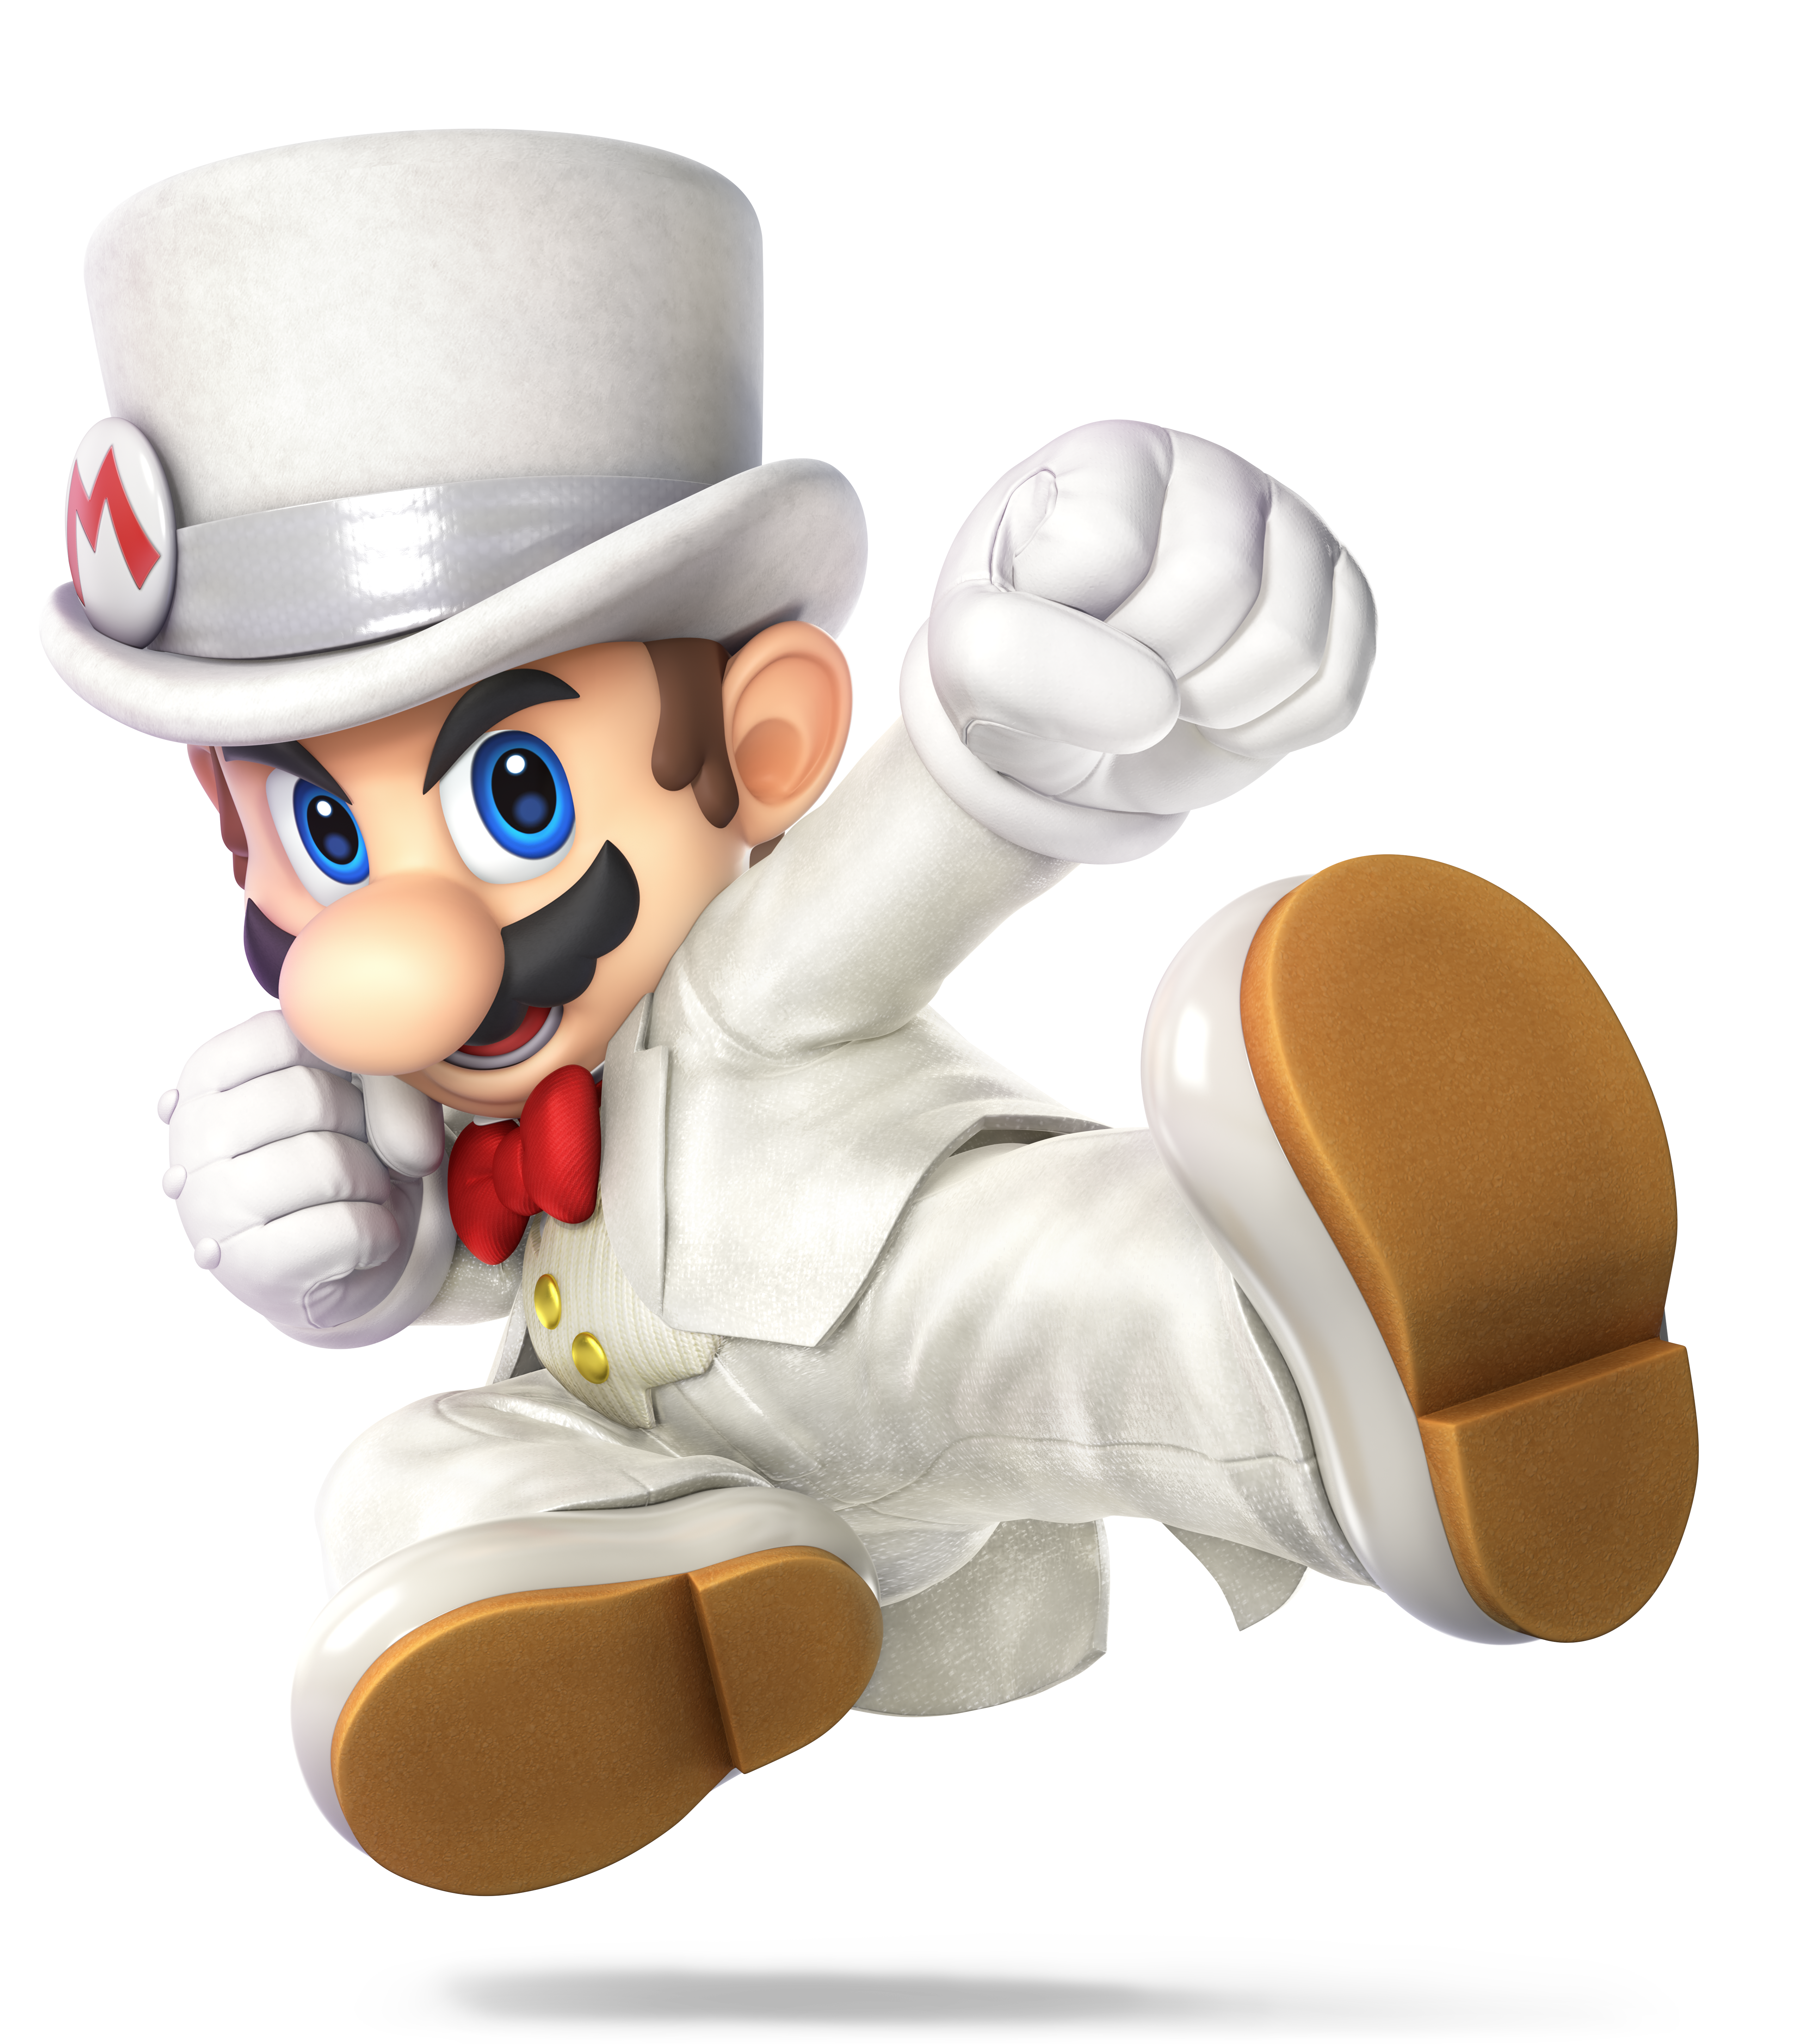 Wedding Suit Mario Render From Super Smash Bros. Ultimate